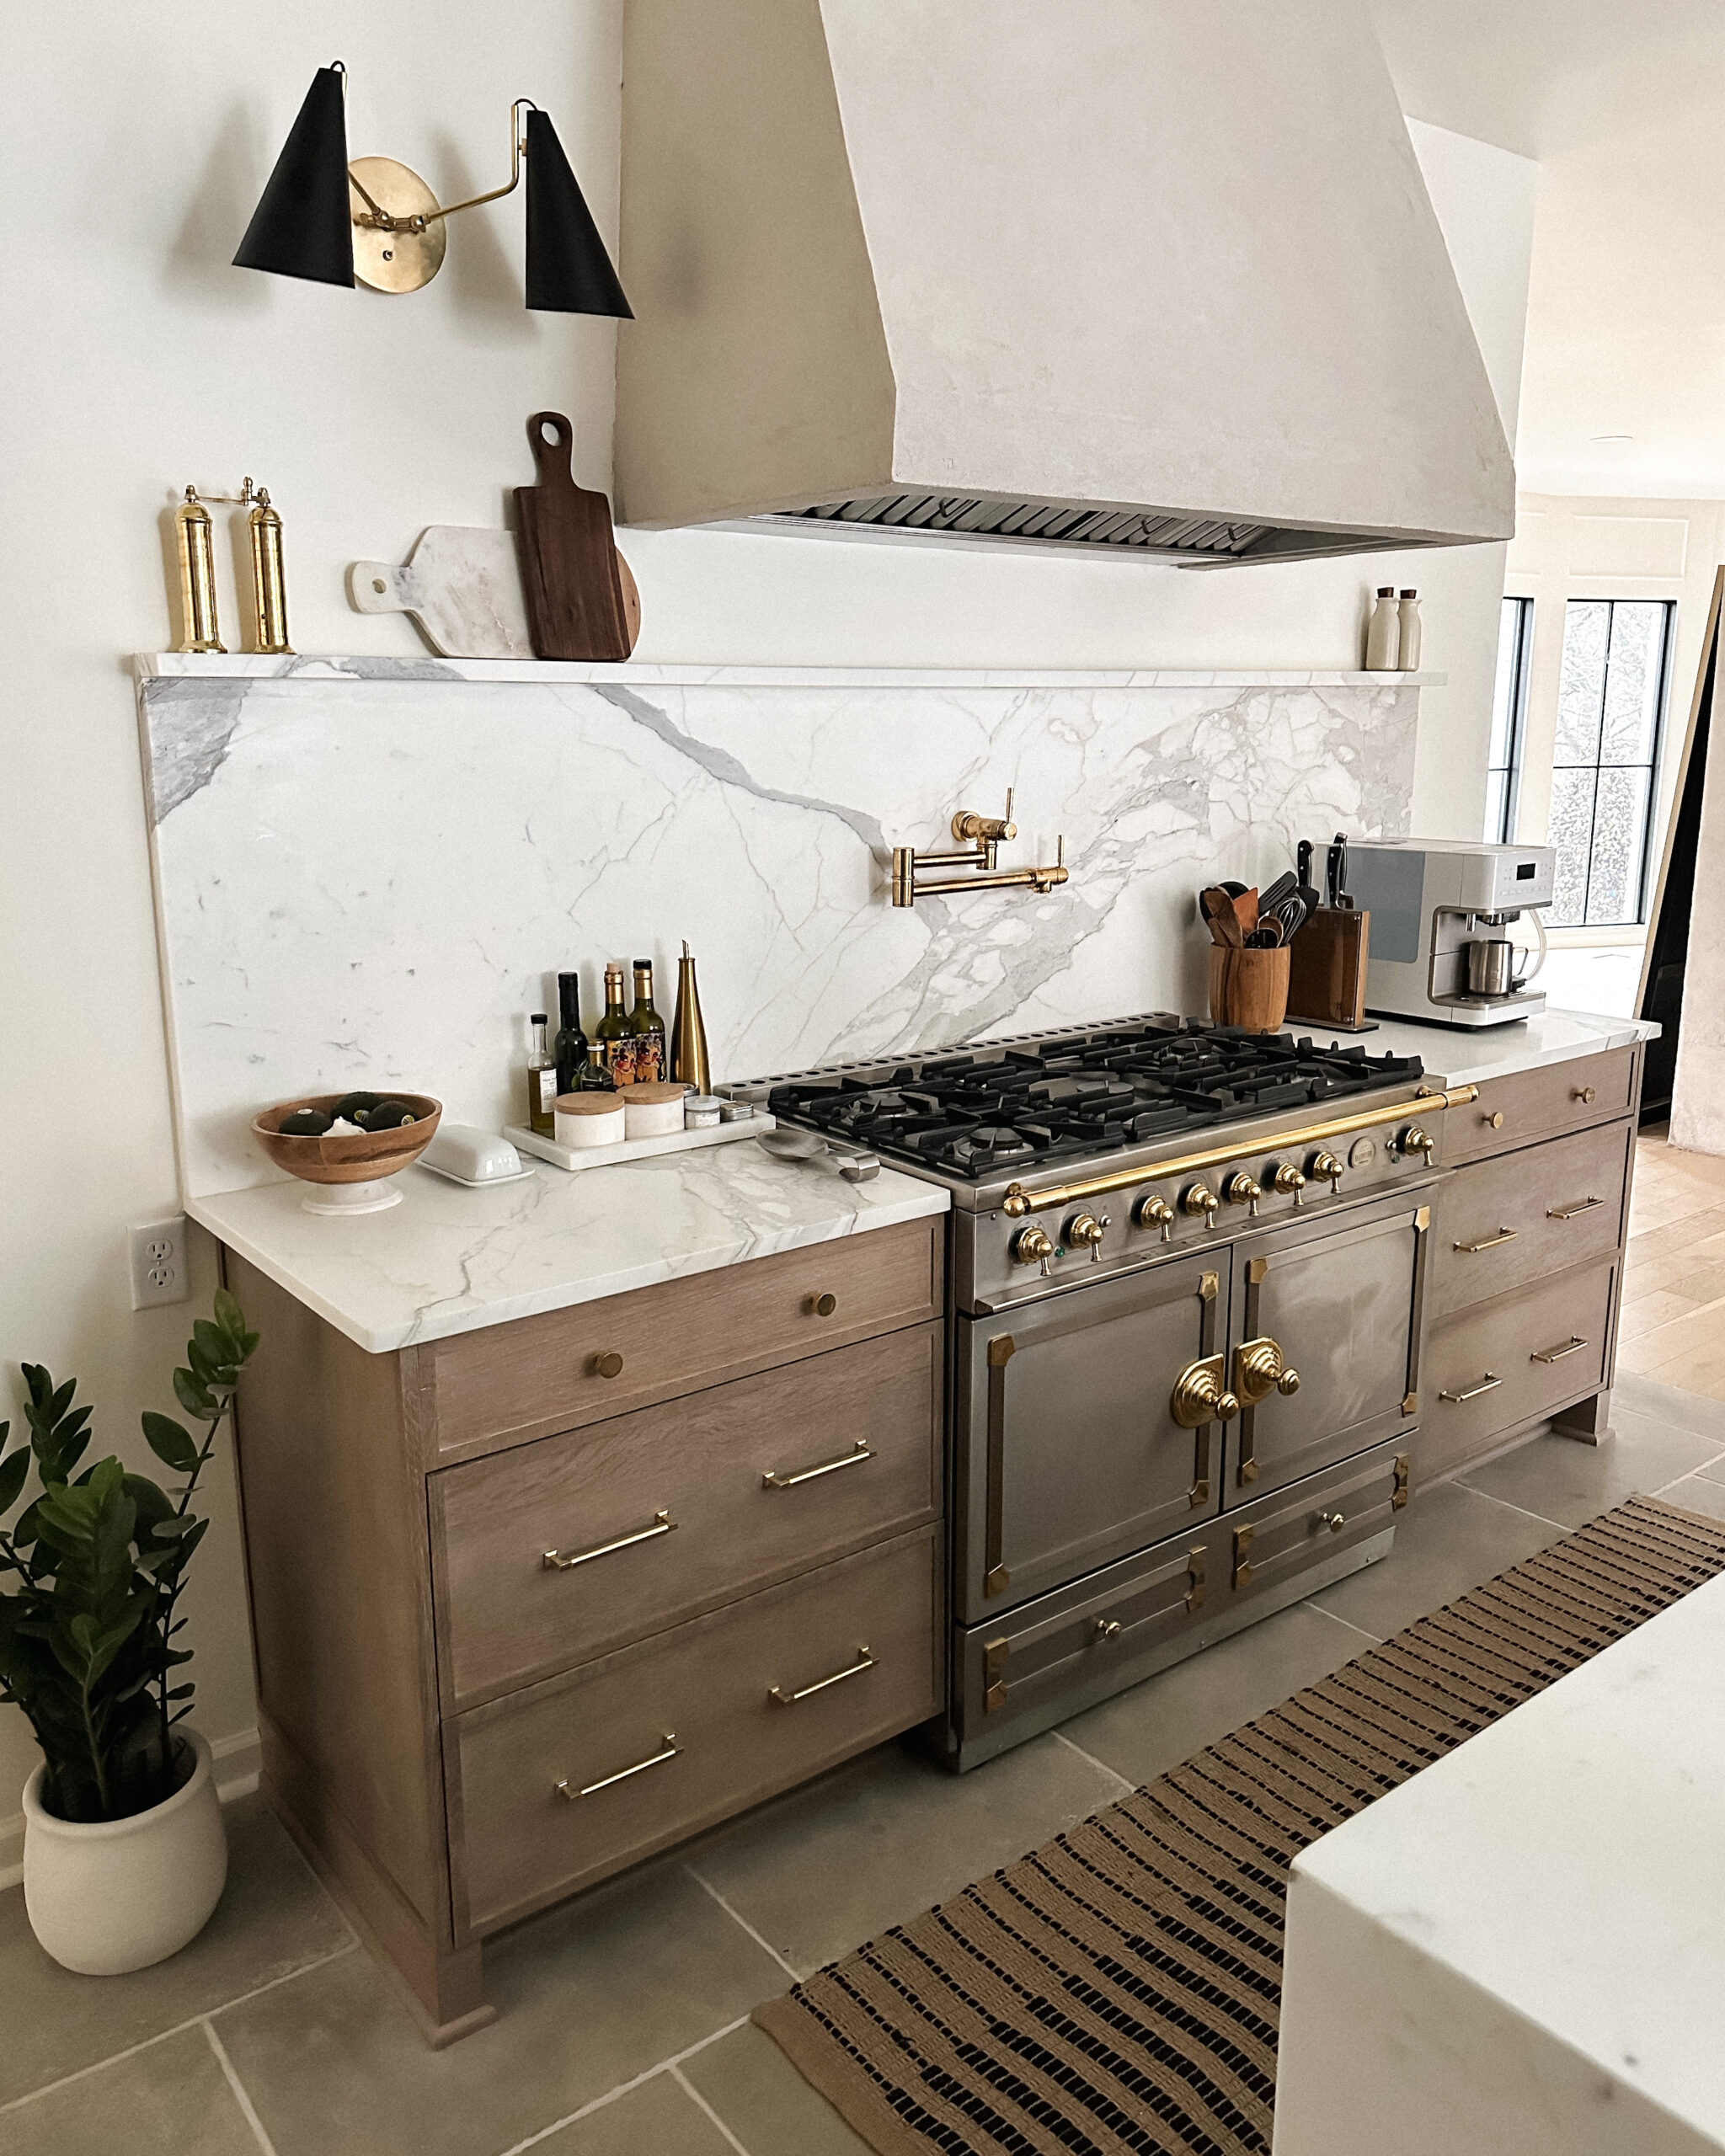 Fashion Jackson Transitional Kitchen Renovation Marble Kitchen Countertops La Cornue Oven Range Unlacquered Brass Pot Filler